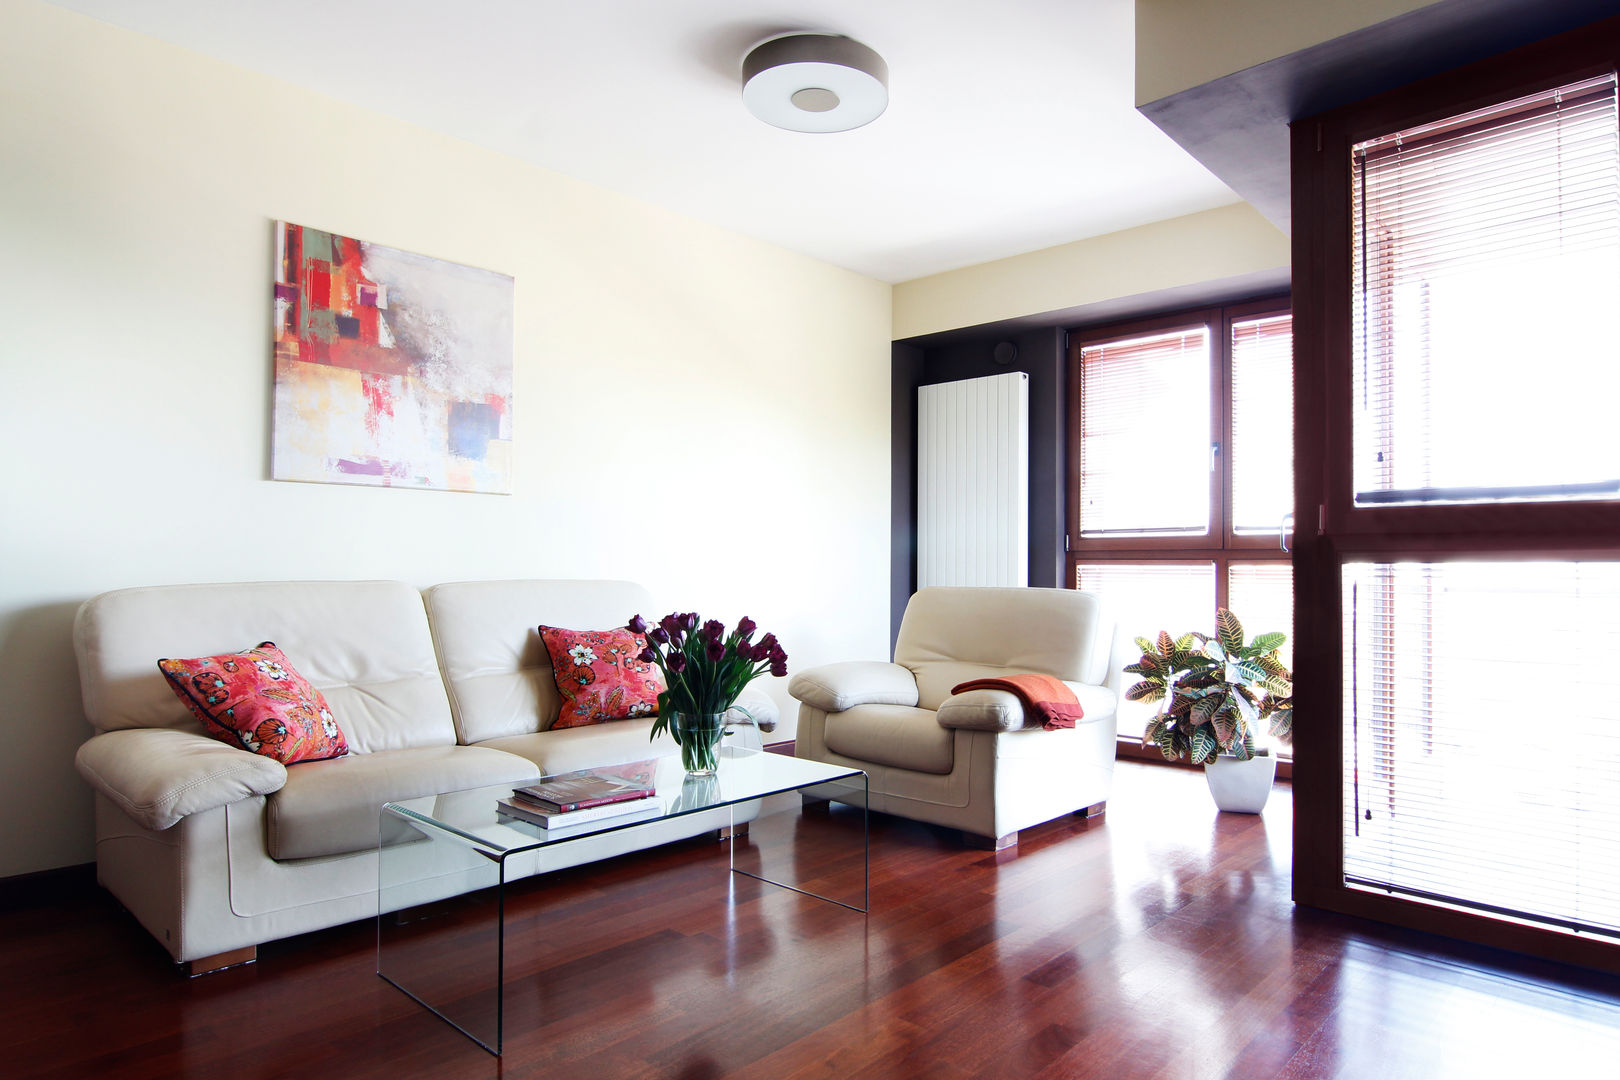 SALON PO METAMORFOZIE Better Home Interior Design